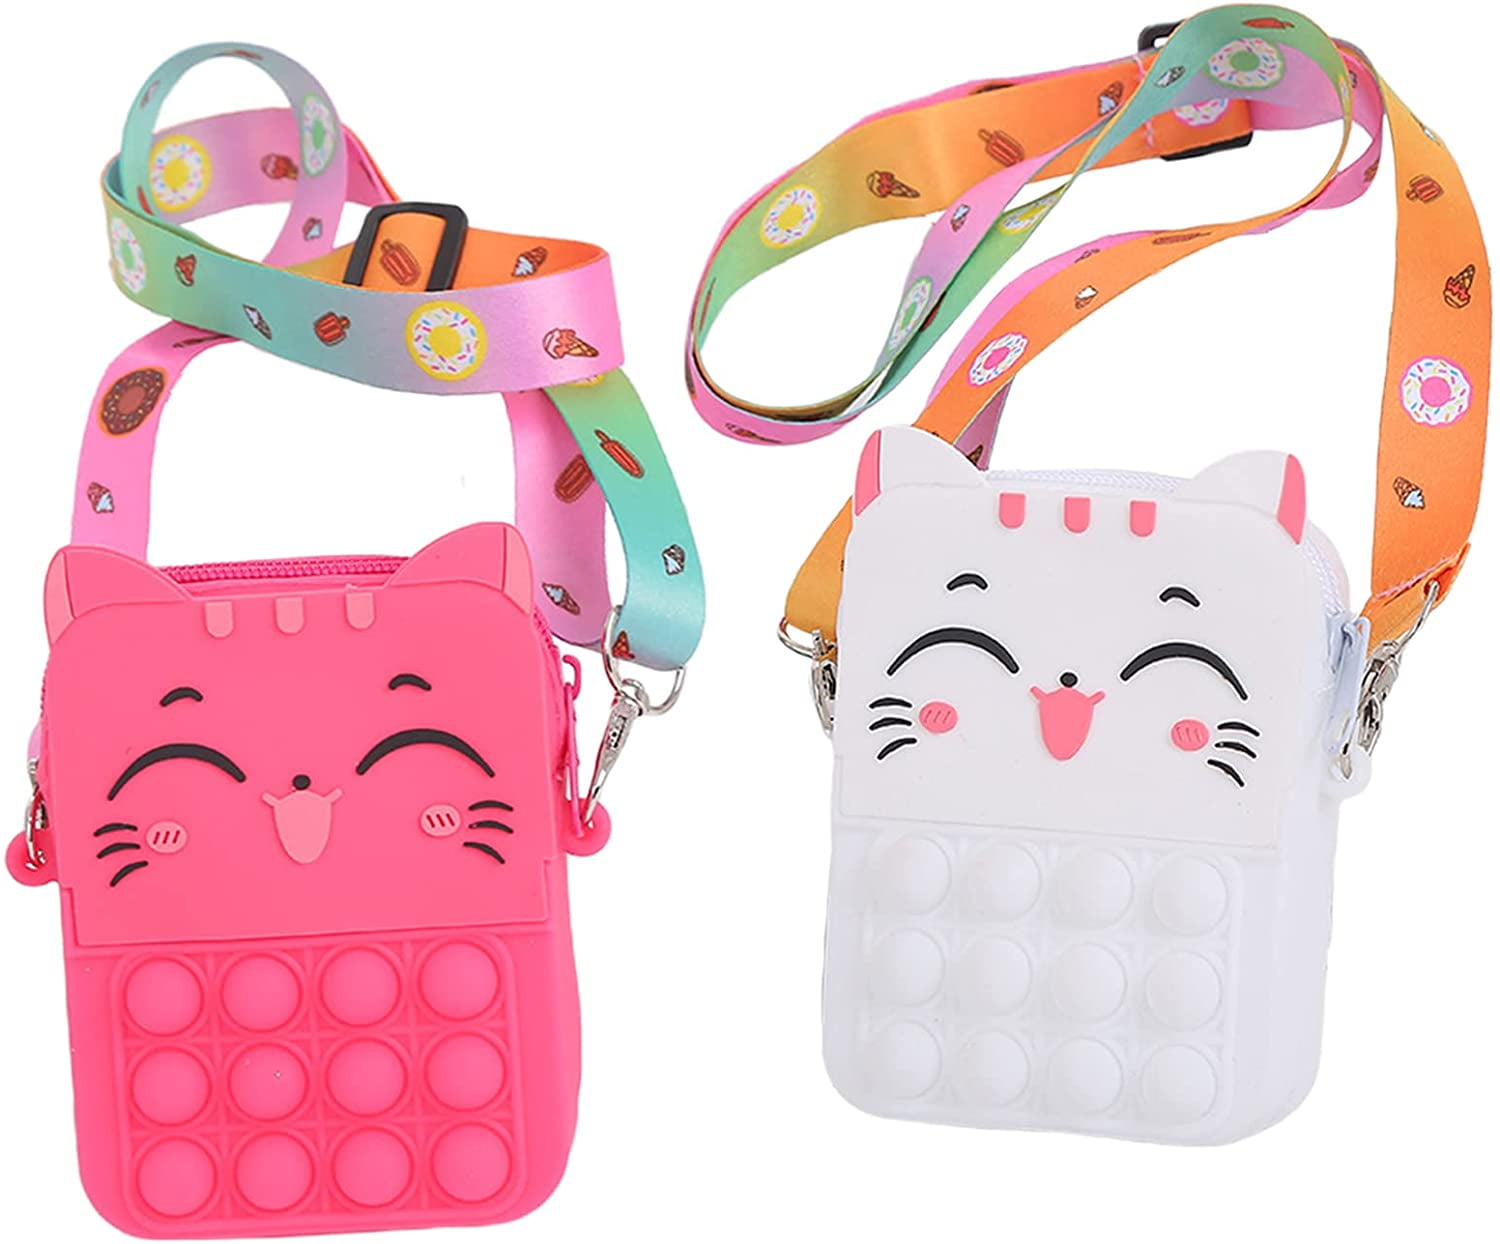 Girls' Kitty Handbags Cat Ear Mini Shoulder Bags Coin Purse for Princess Birthday Presents 